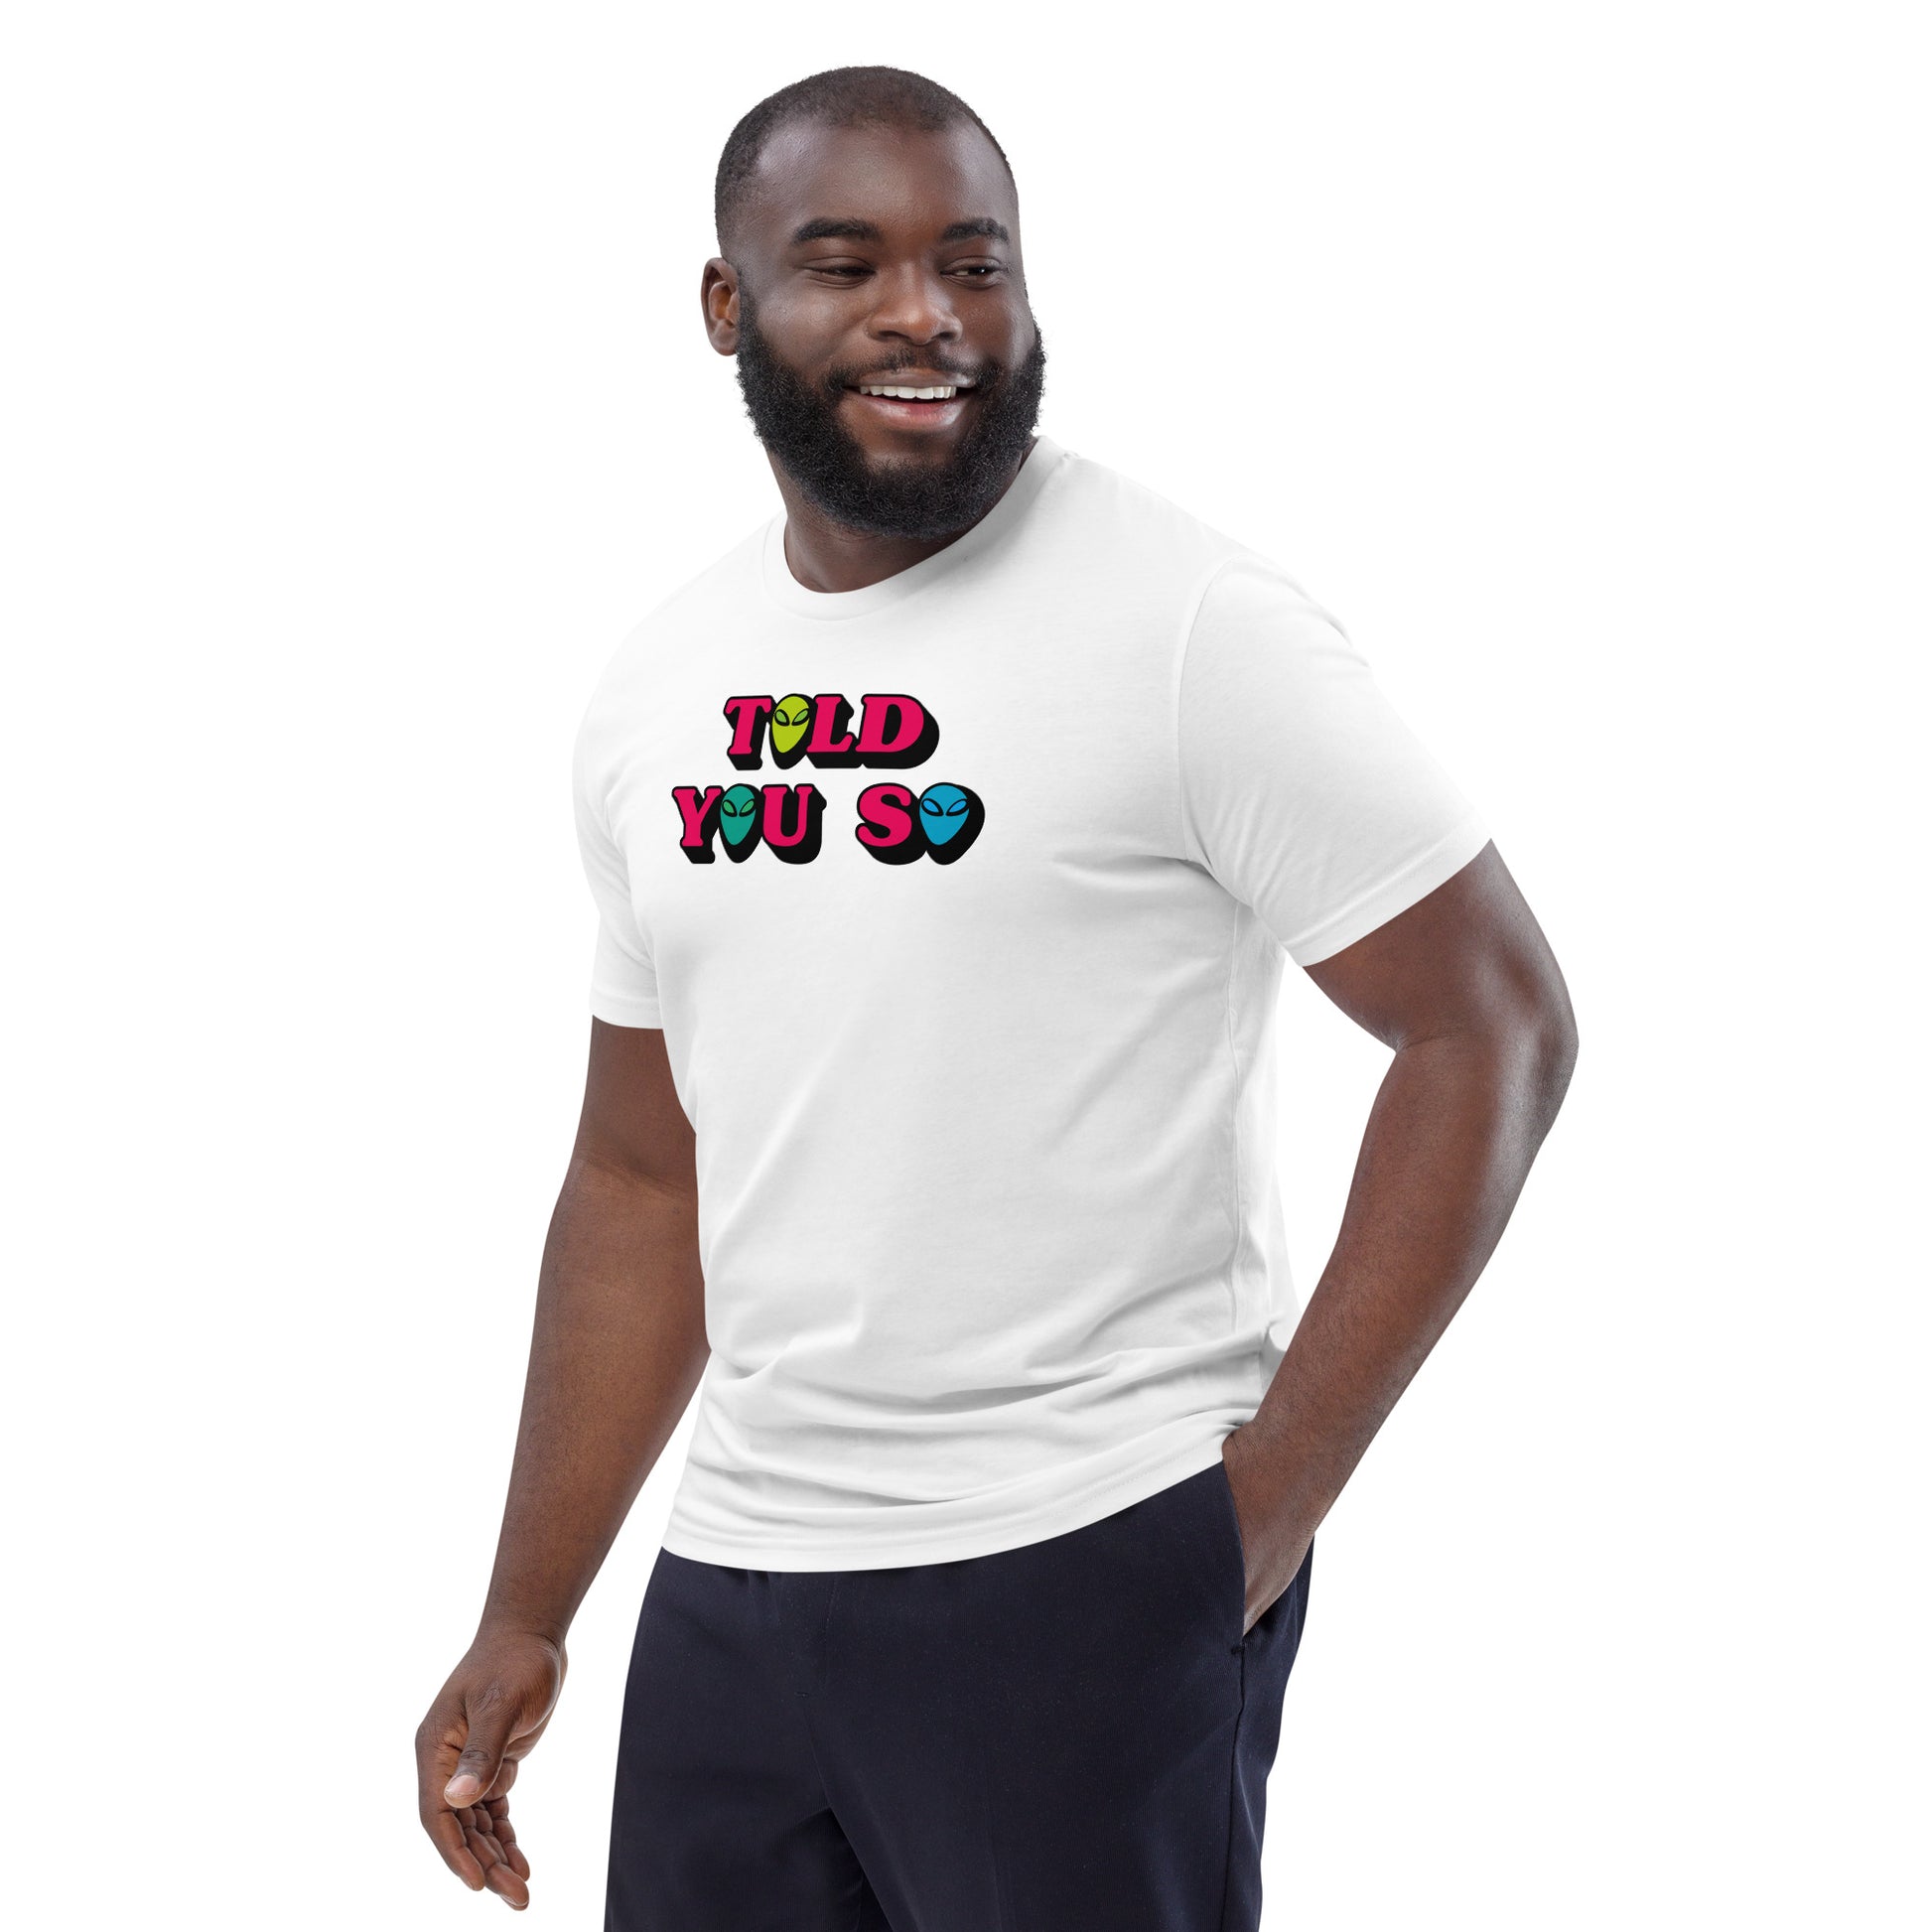 Organic cotton t-shirt for men with fun meme 'TOLD YOU SO' – PROUD